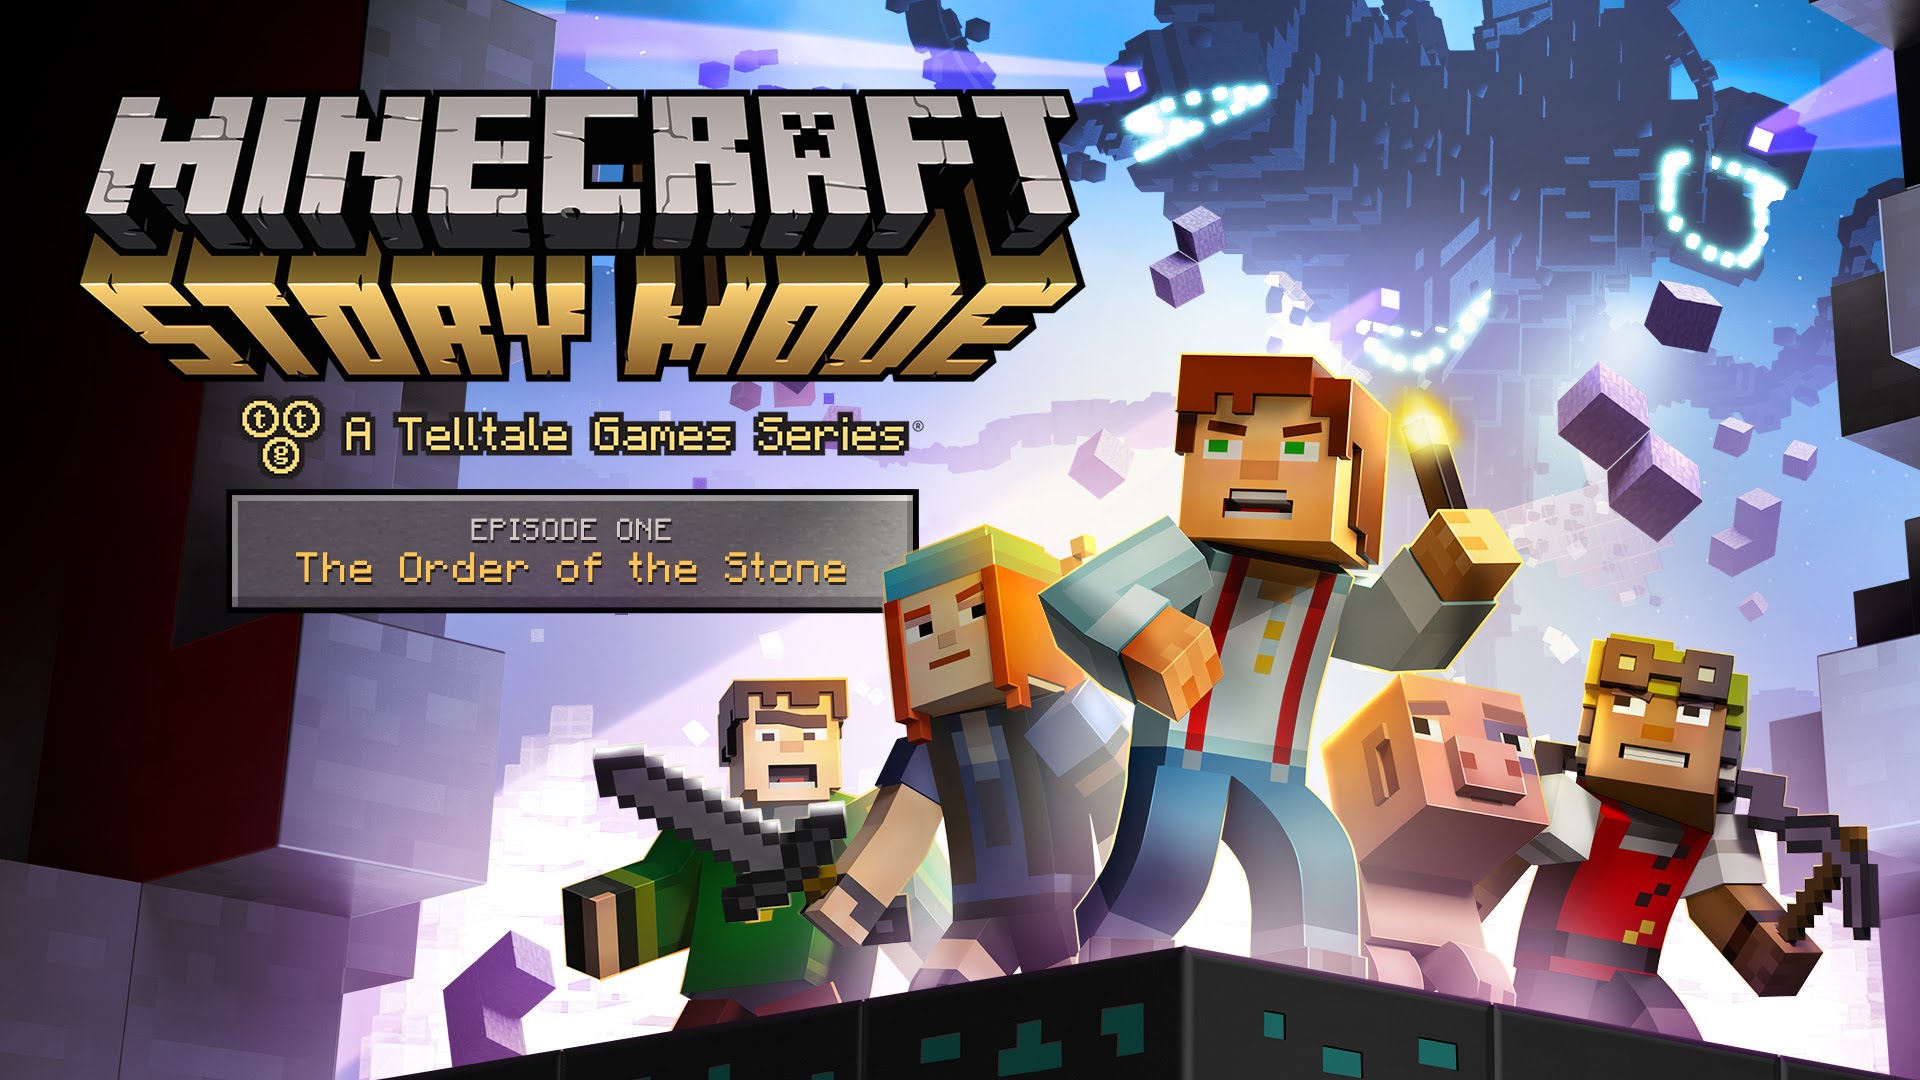 Minecraft: Story Mode - Season Two: Episode 1 - Hero in Residence